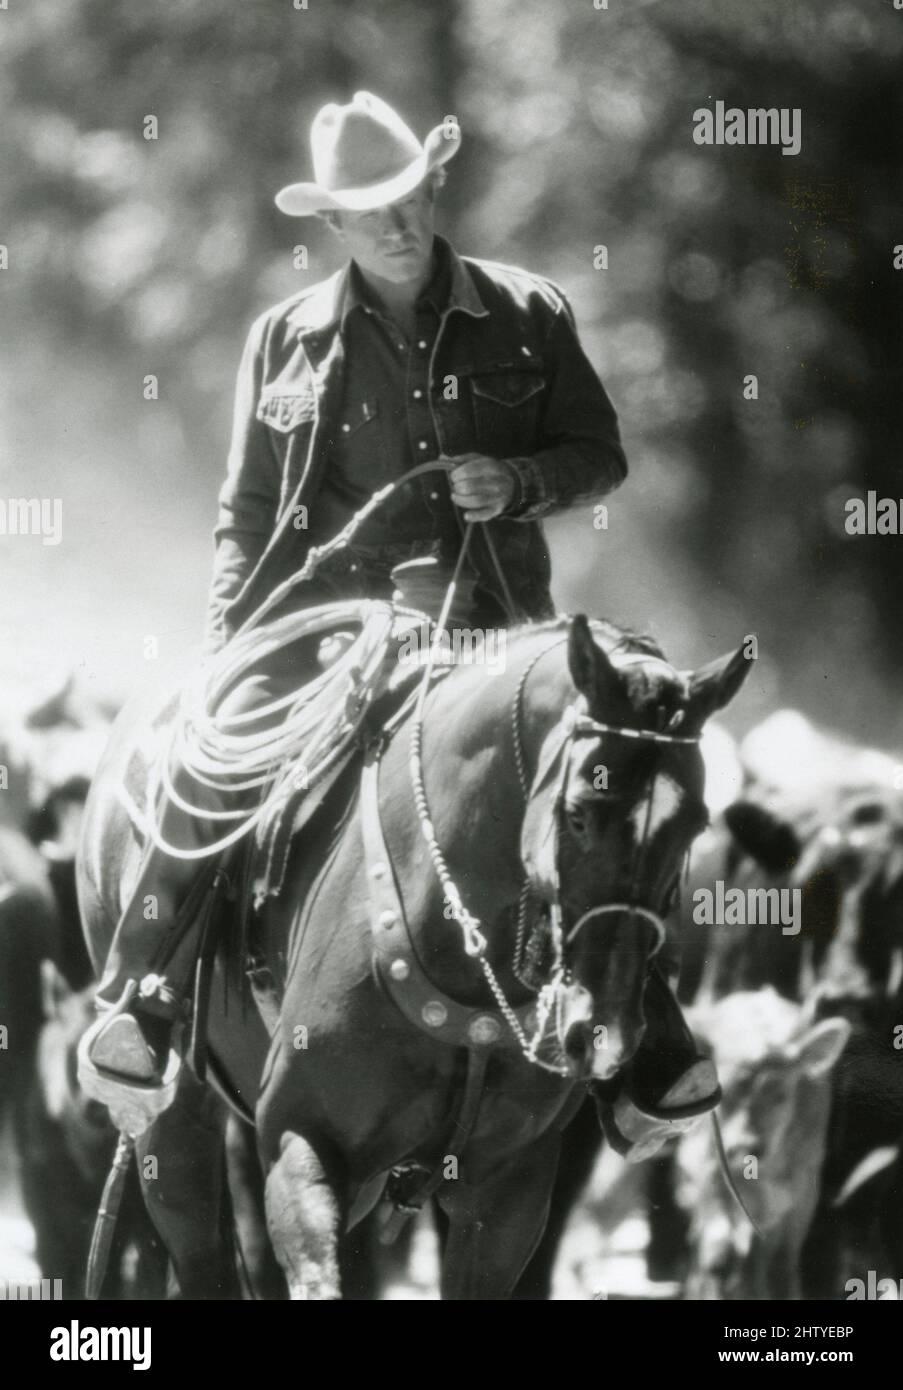 El actor estadounidense Robert Redford en la película The Horse Whisperer, USA 1998 Foto de stock